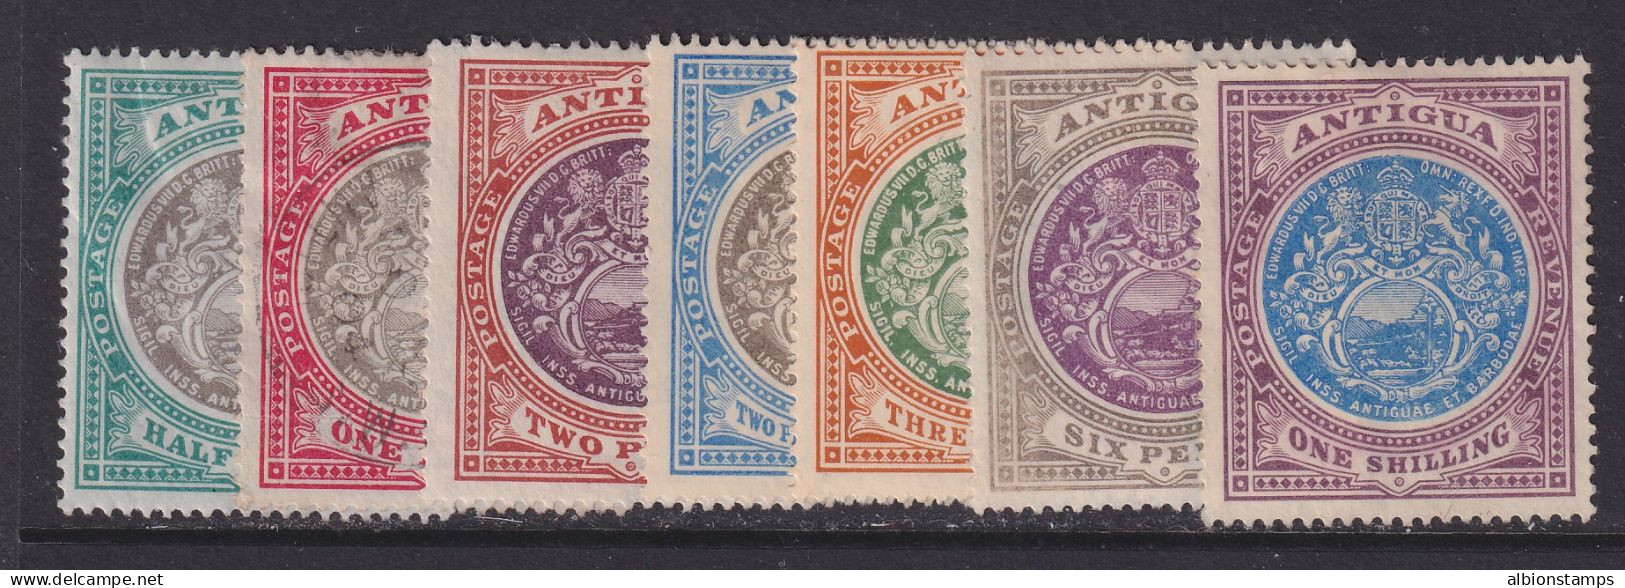 Antigua, Scott 21-27 (SG 31-37), MNG (no Gum), 1p Used - 1858-1960 Crown Colony